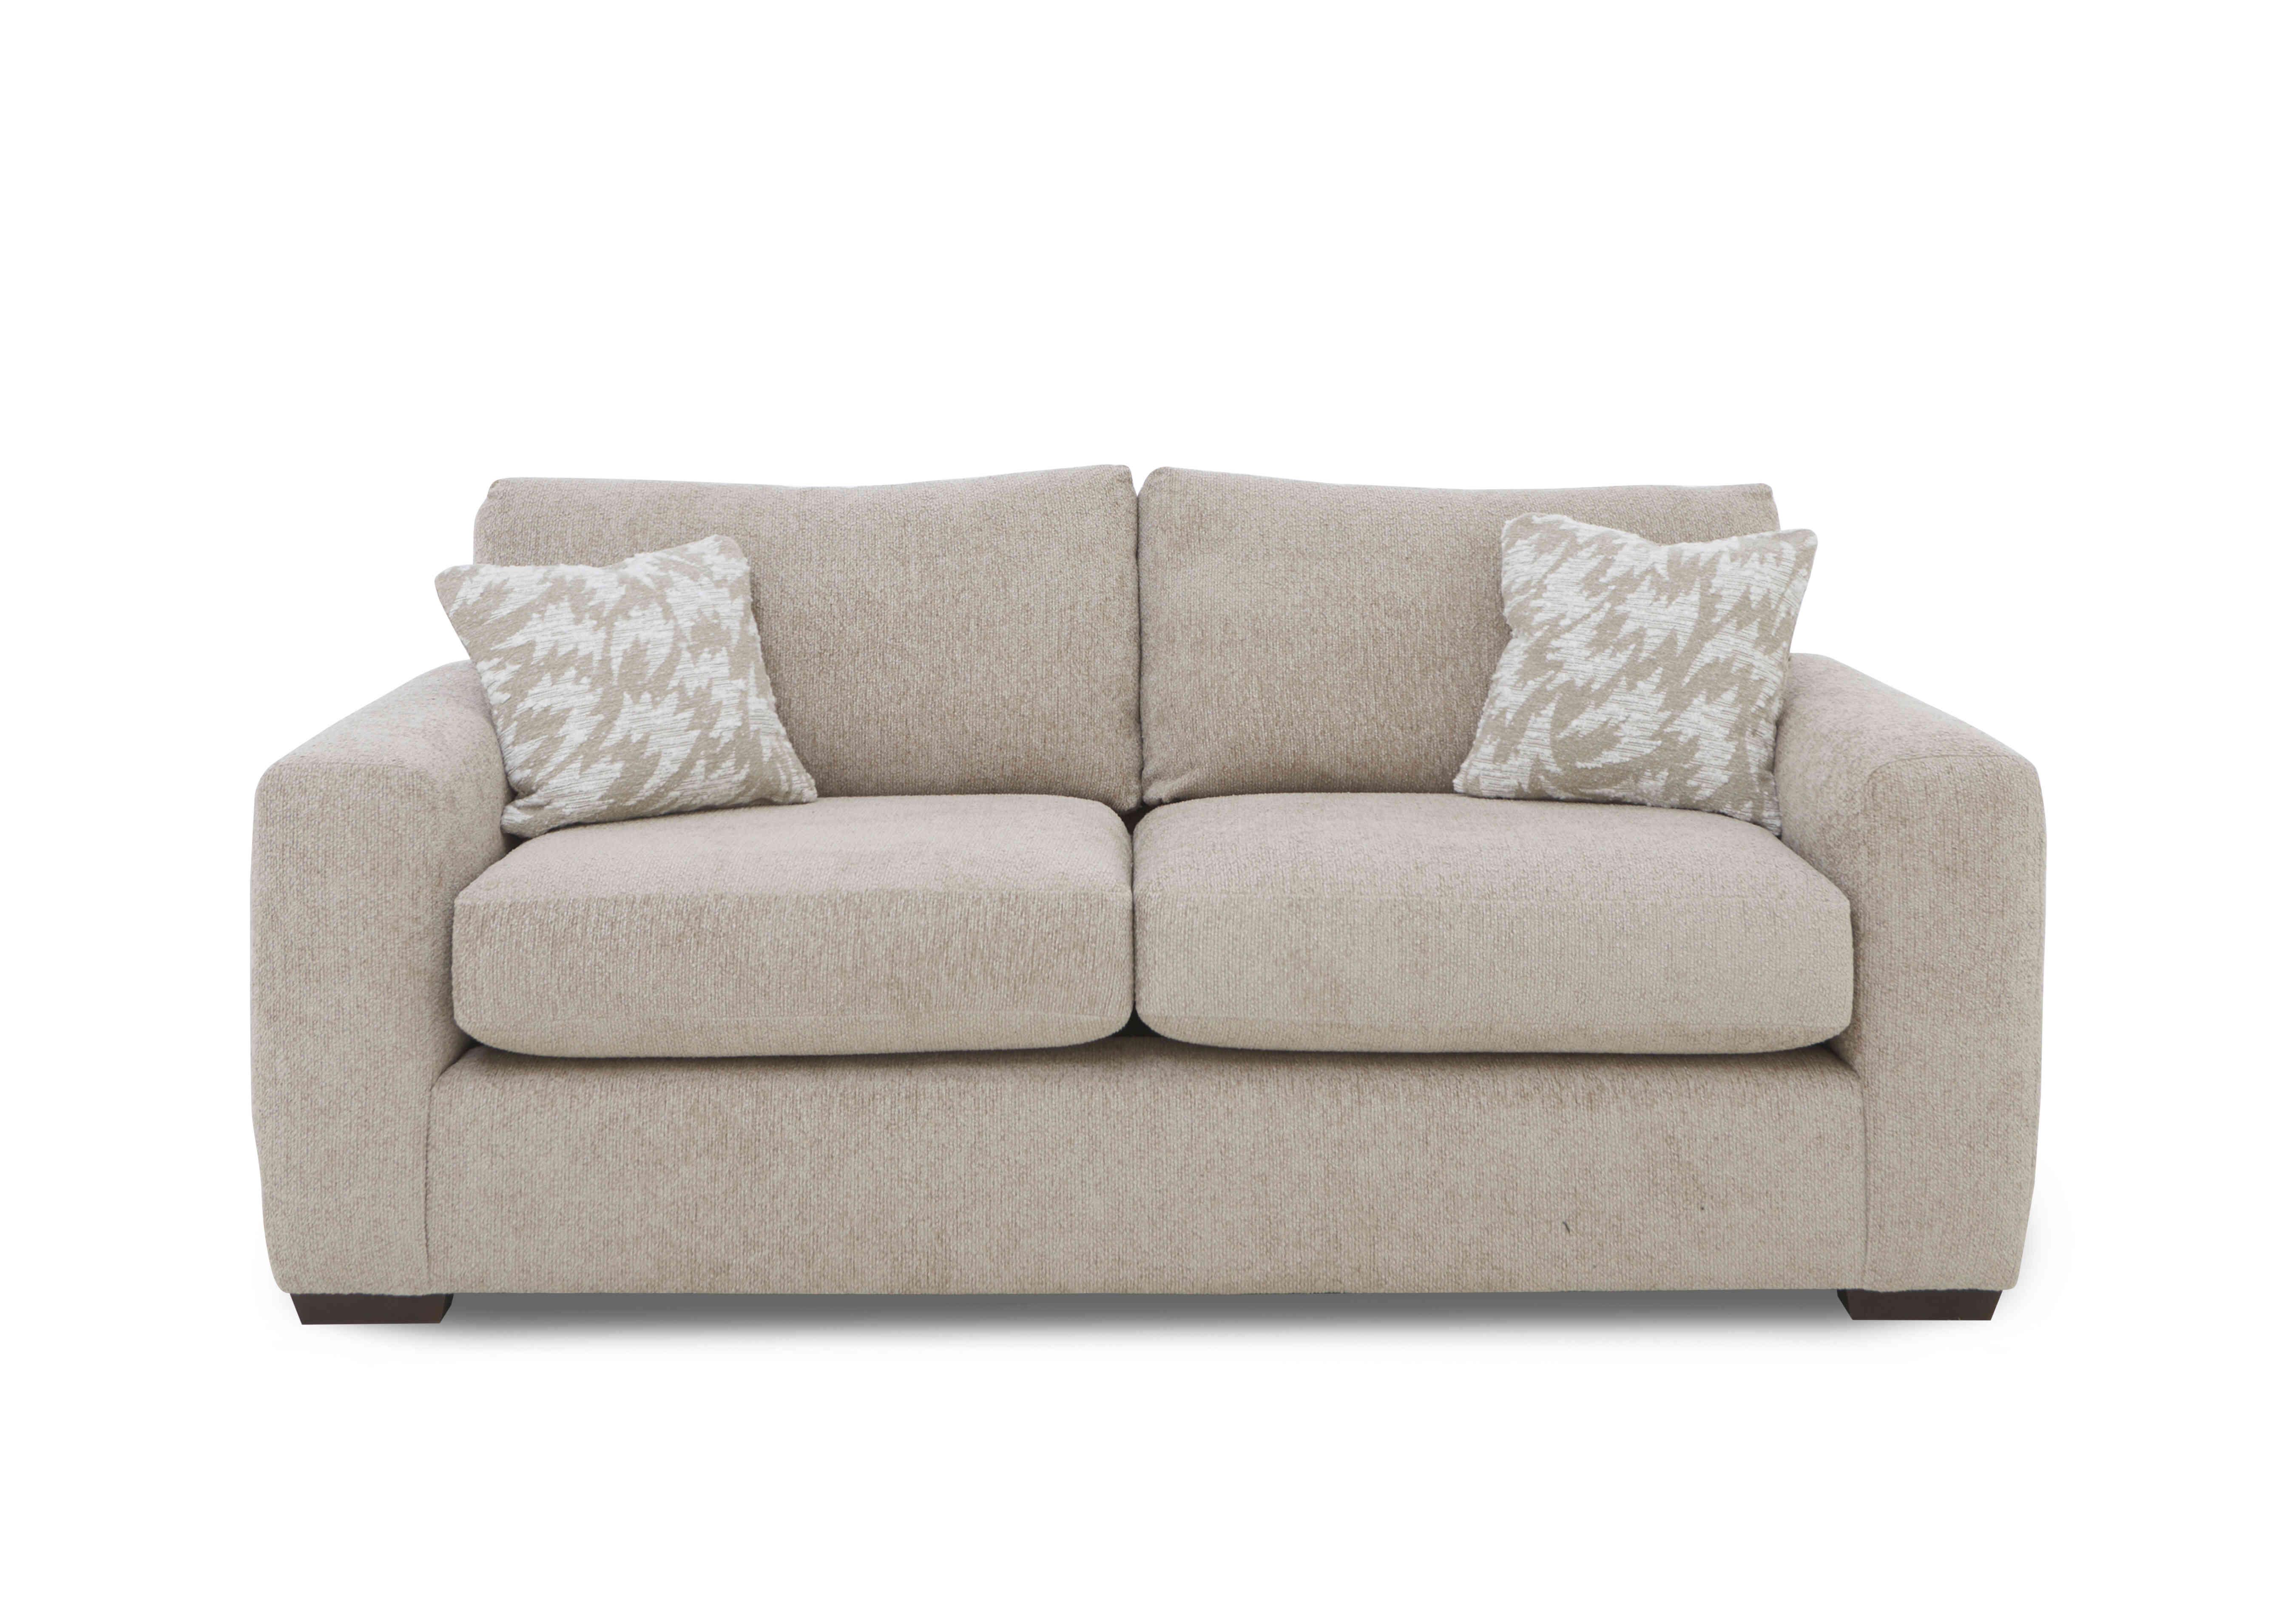 Harper 3 Seater Classic Back Sofa Bed in Leo Wicker on Furniture Village